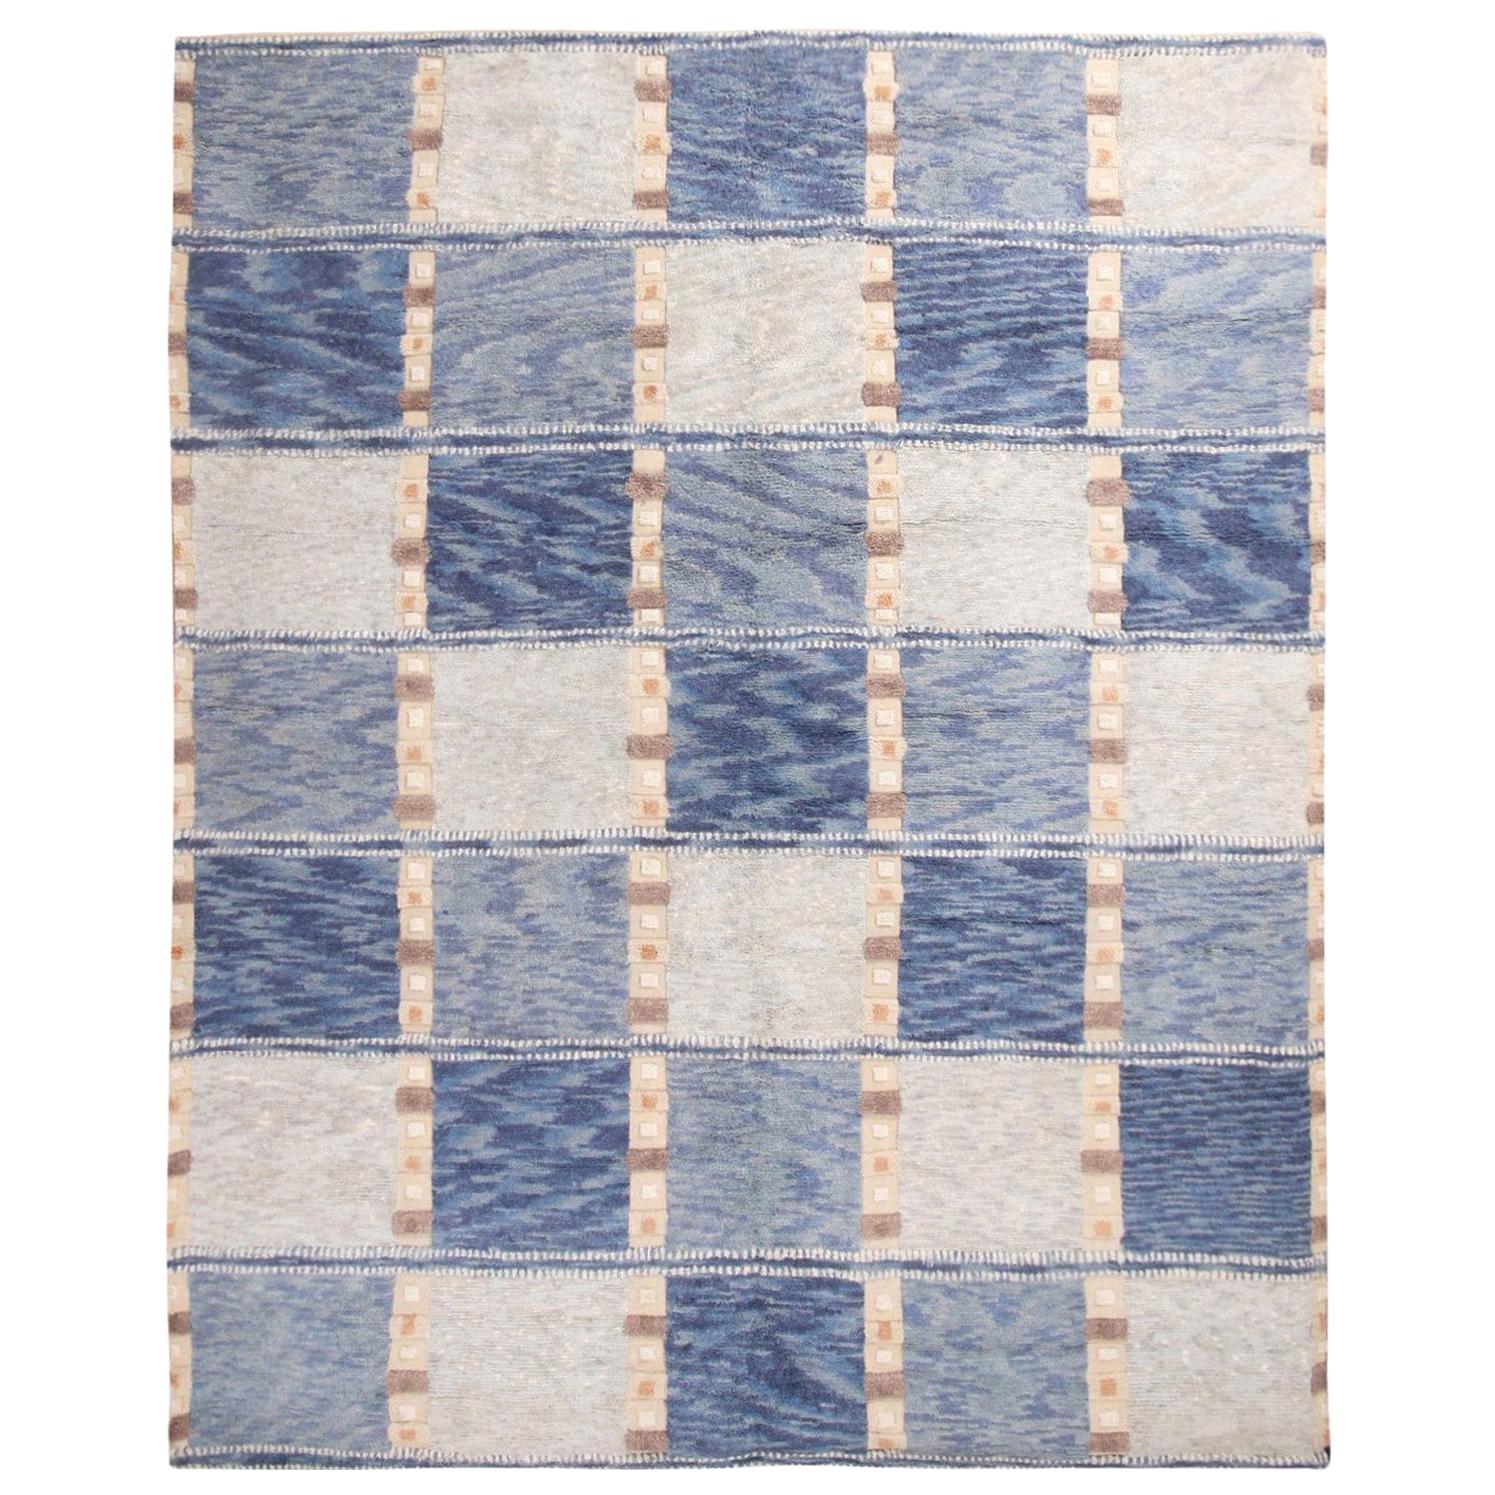 Rug & Kilim’s Scandinavian Inspired Geometric Gray and Blue Wool Pile Rug